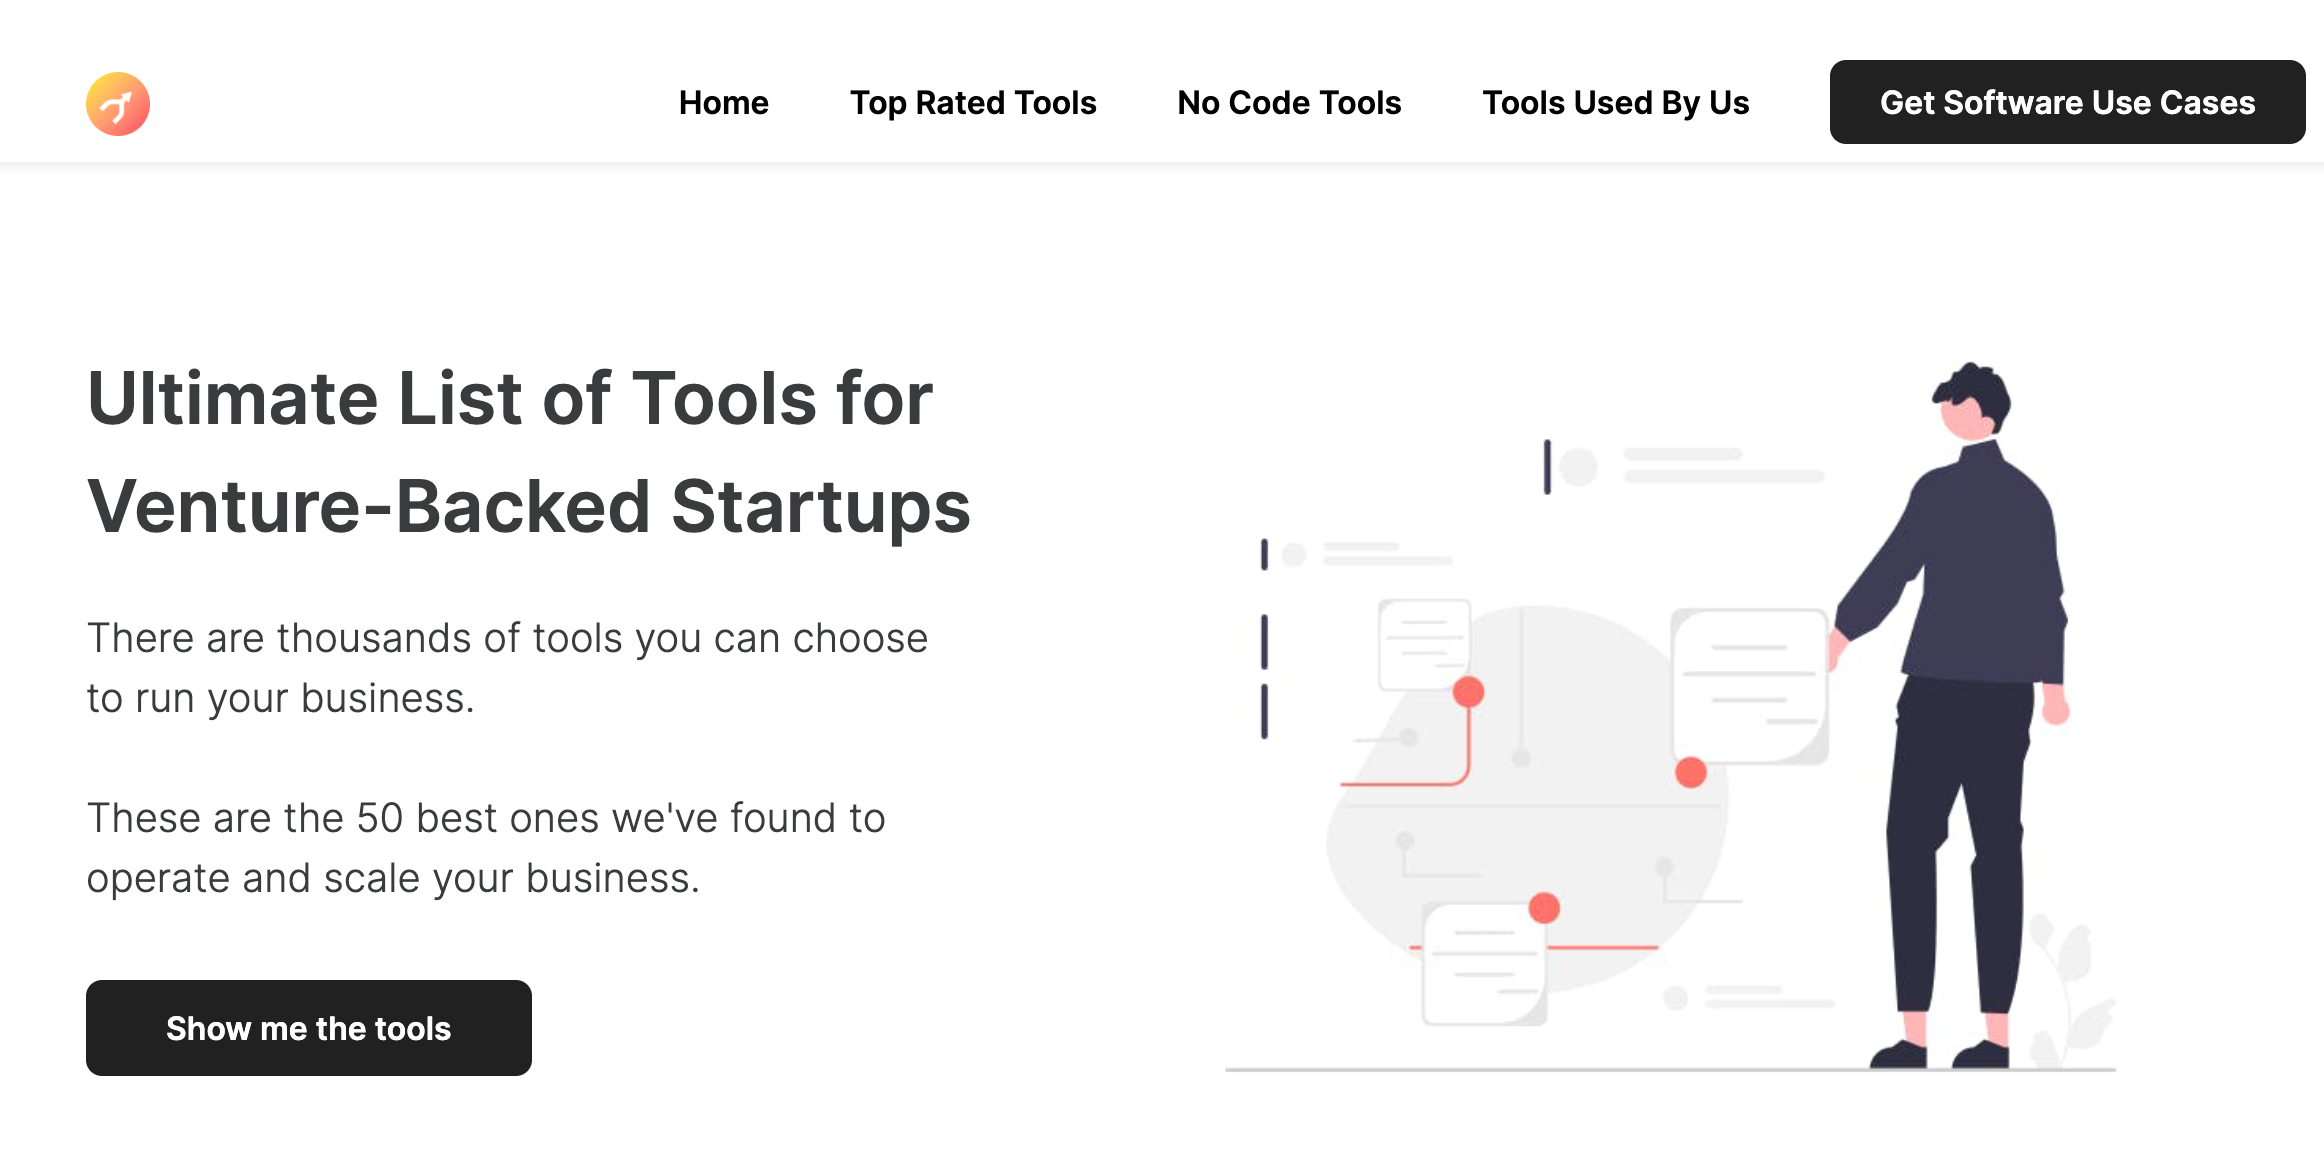 Startup Tools